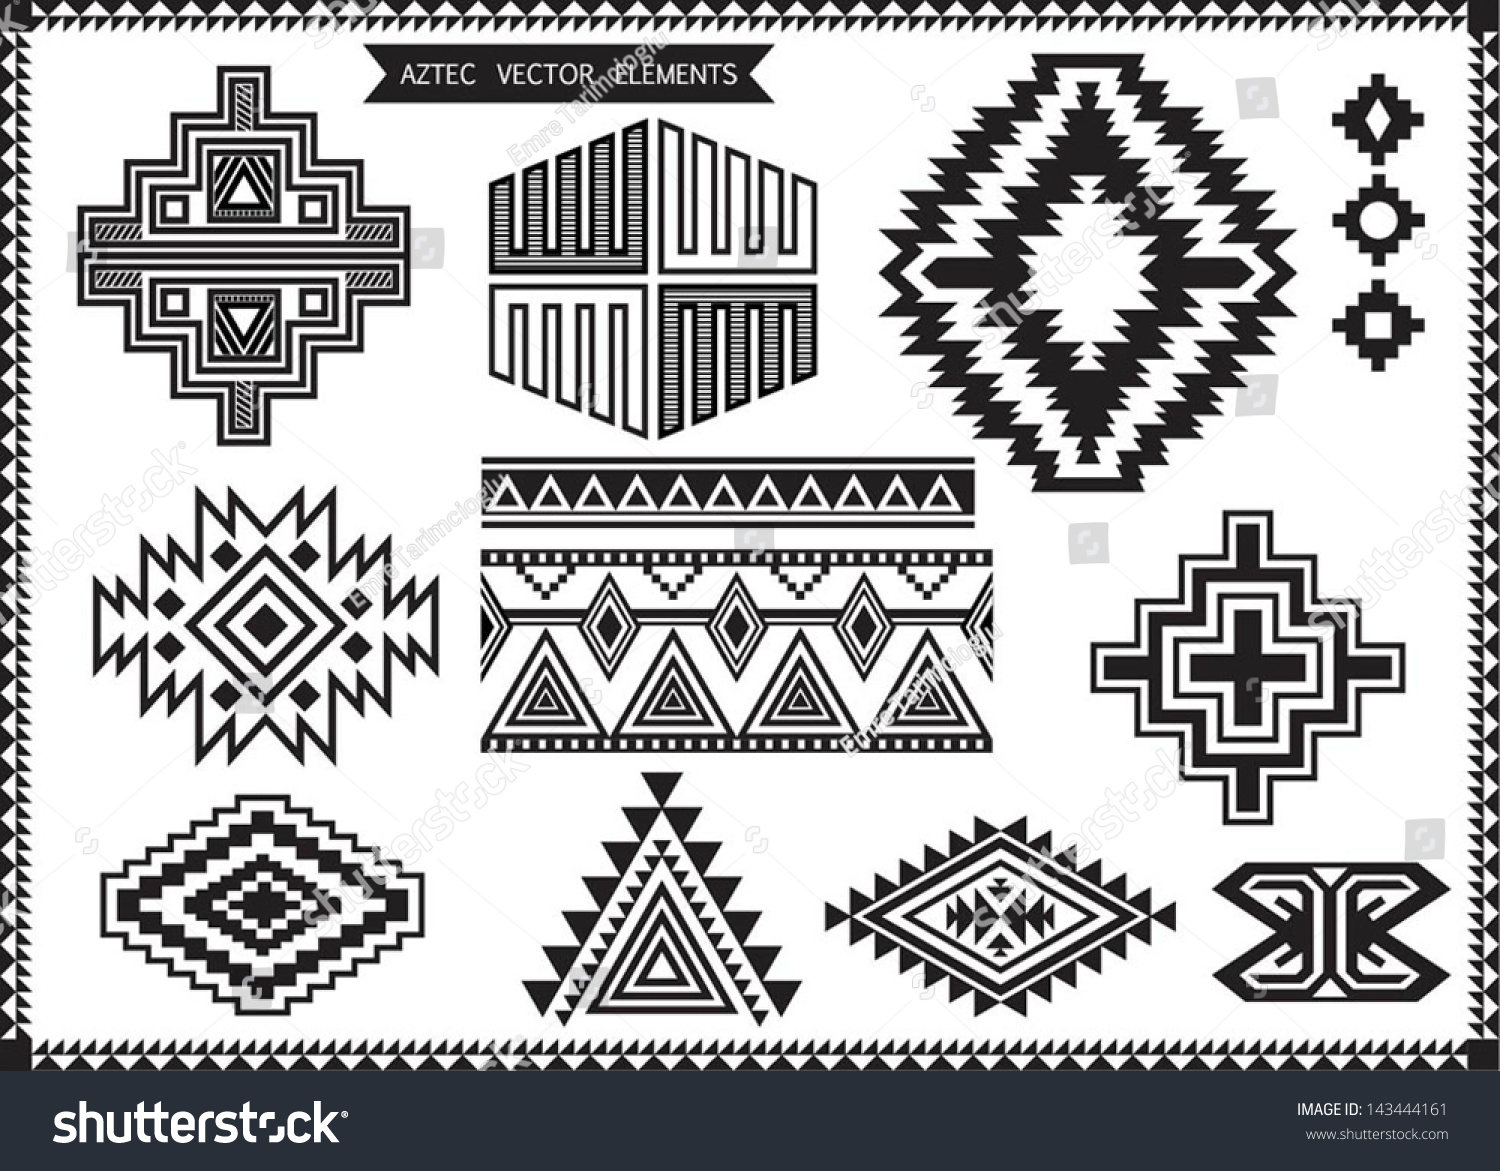 Vector Symbols Of Aztec And Maya Free Download Vector Stock Image ...